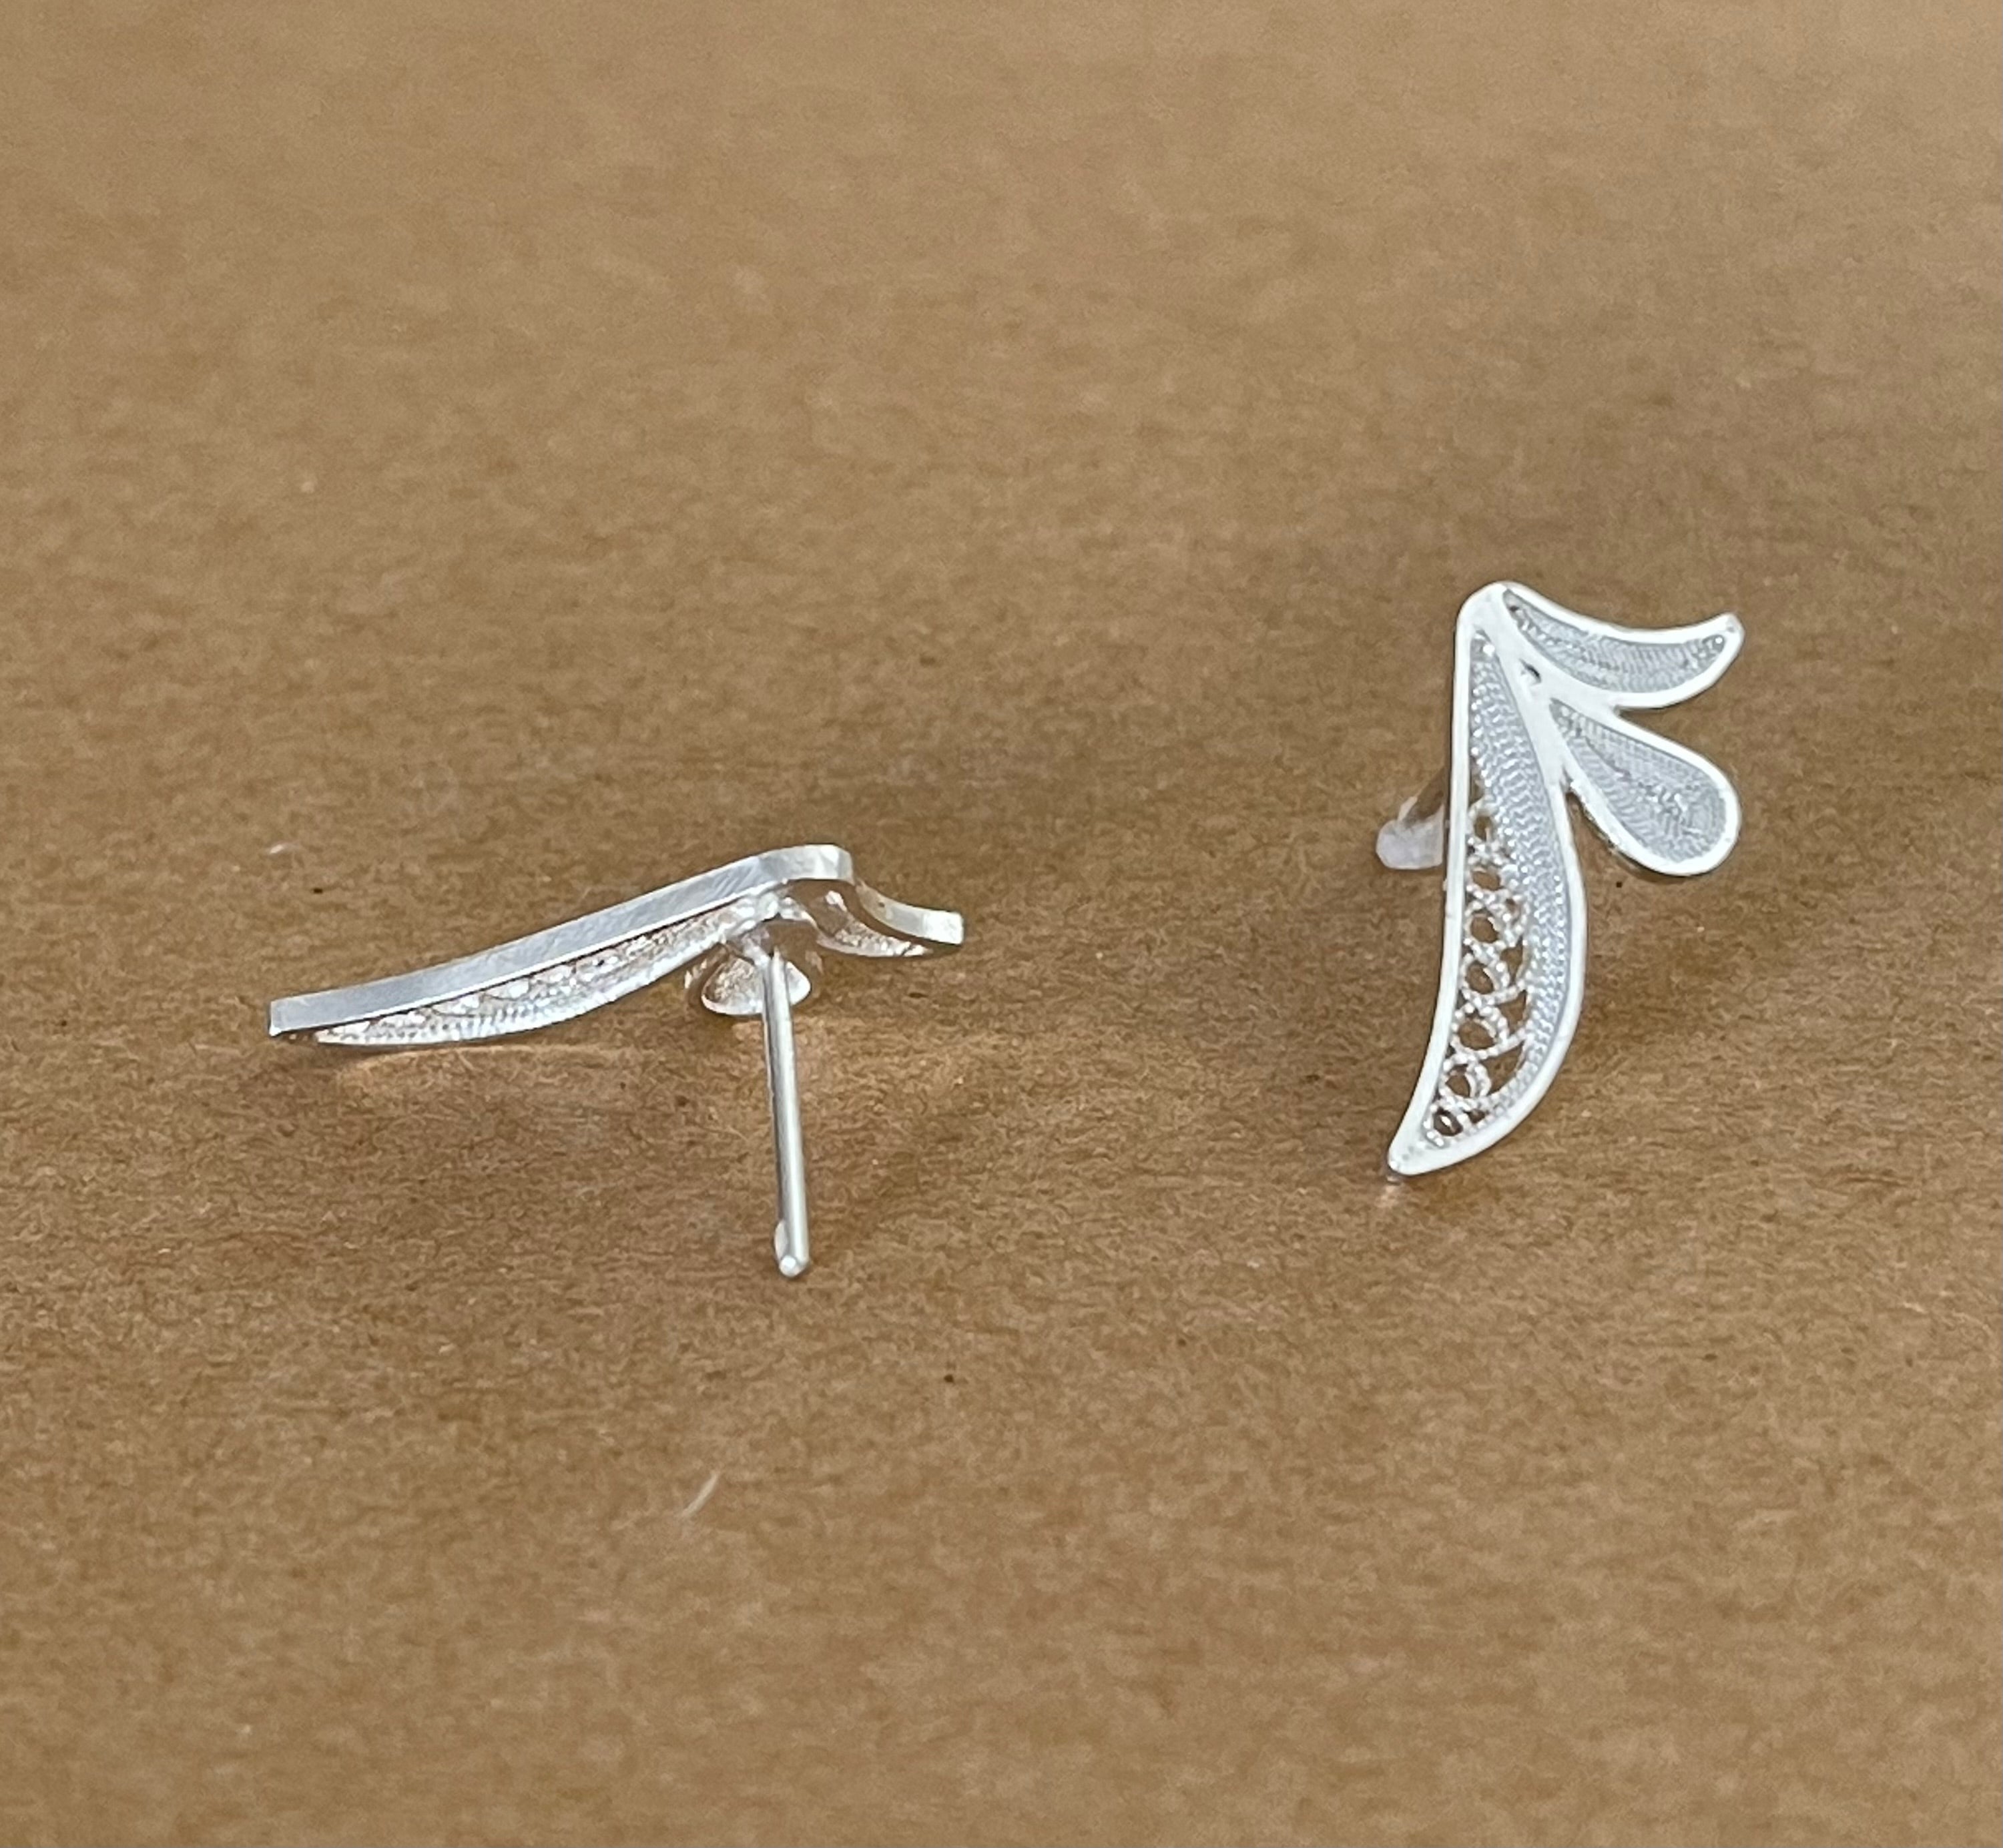 Wing earrings filigree sterling silver ley 925